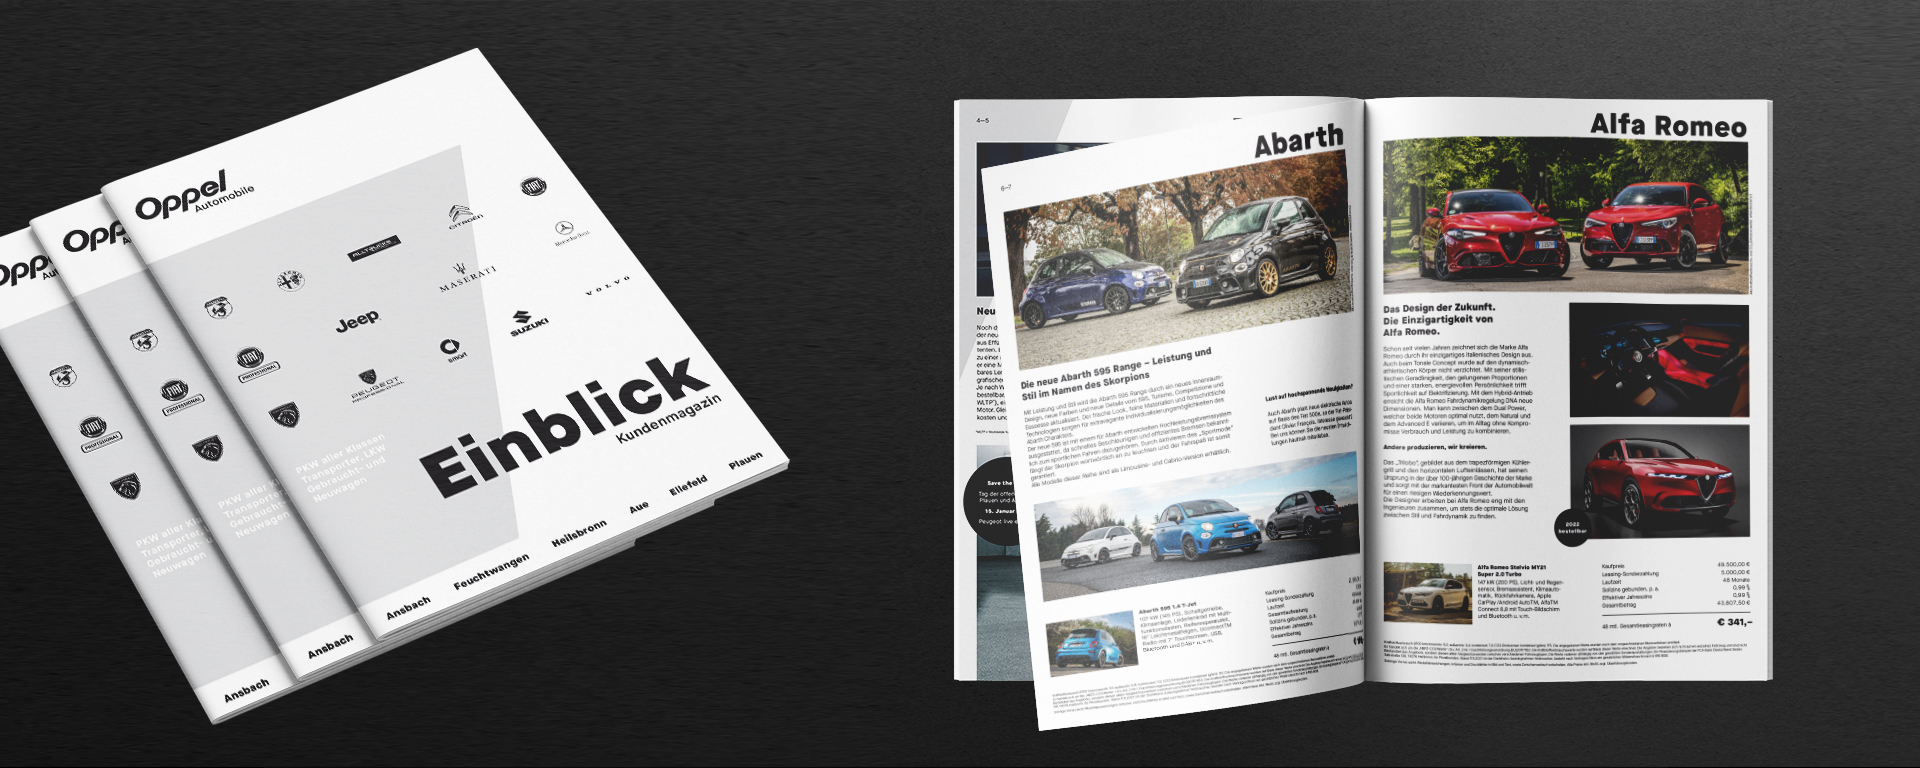 Oppel Automobile – Corporate Design Autohaus, Kundenmagazin Editorial Doppelseite und Cover